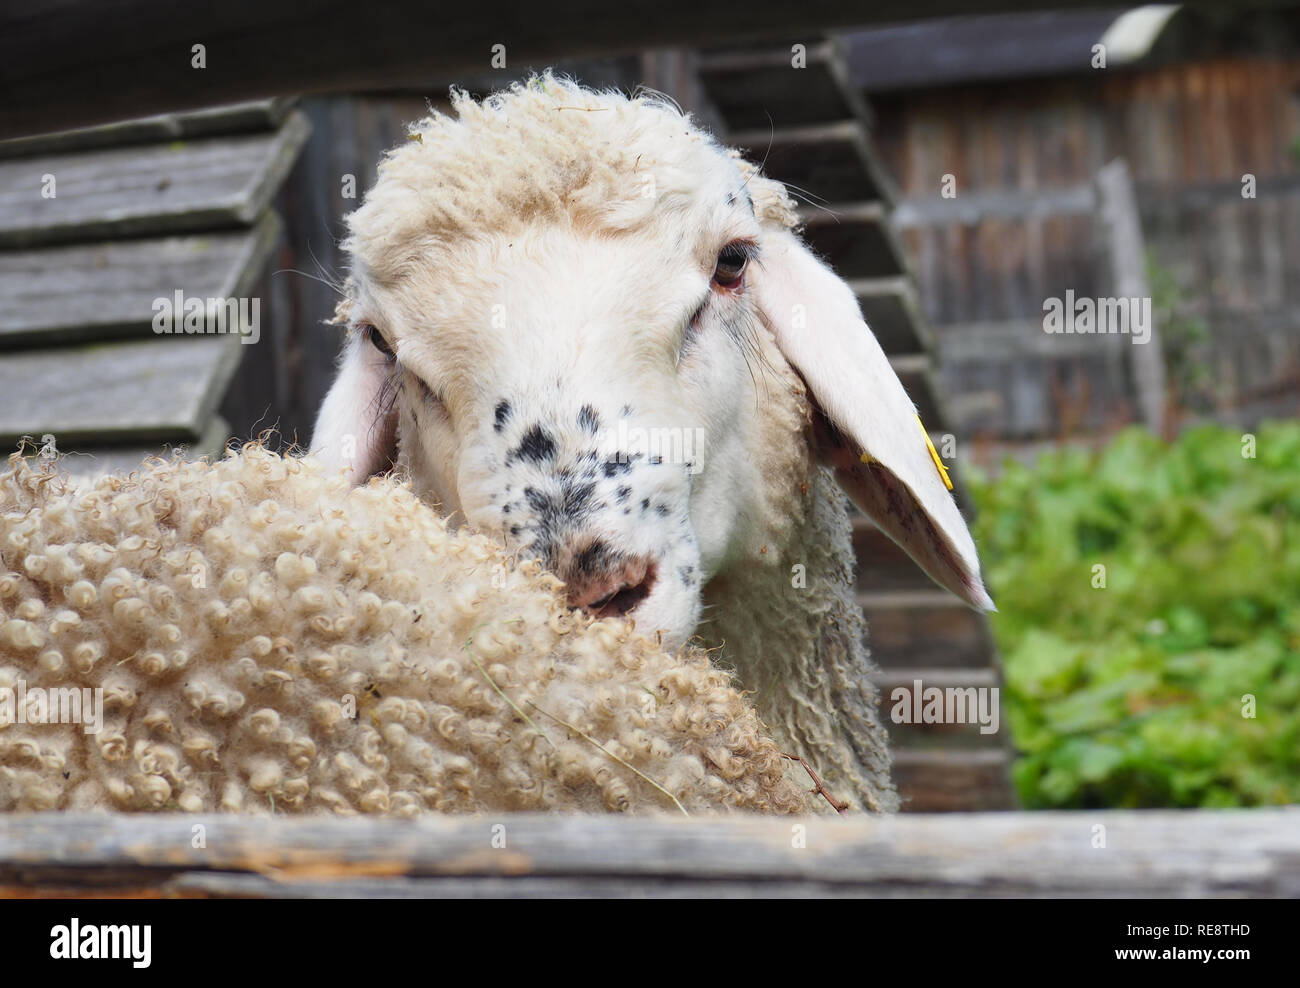 Sheep portrait Stock Photo